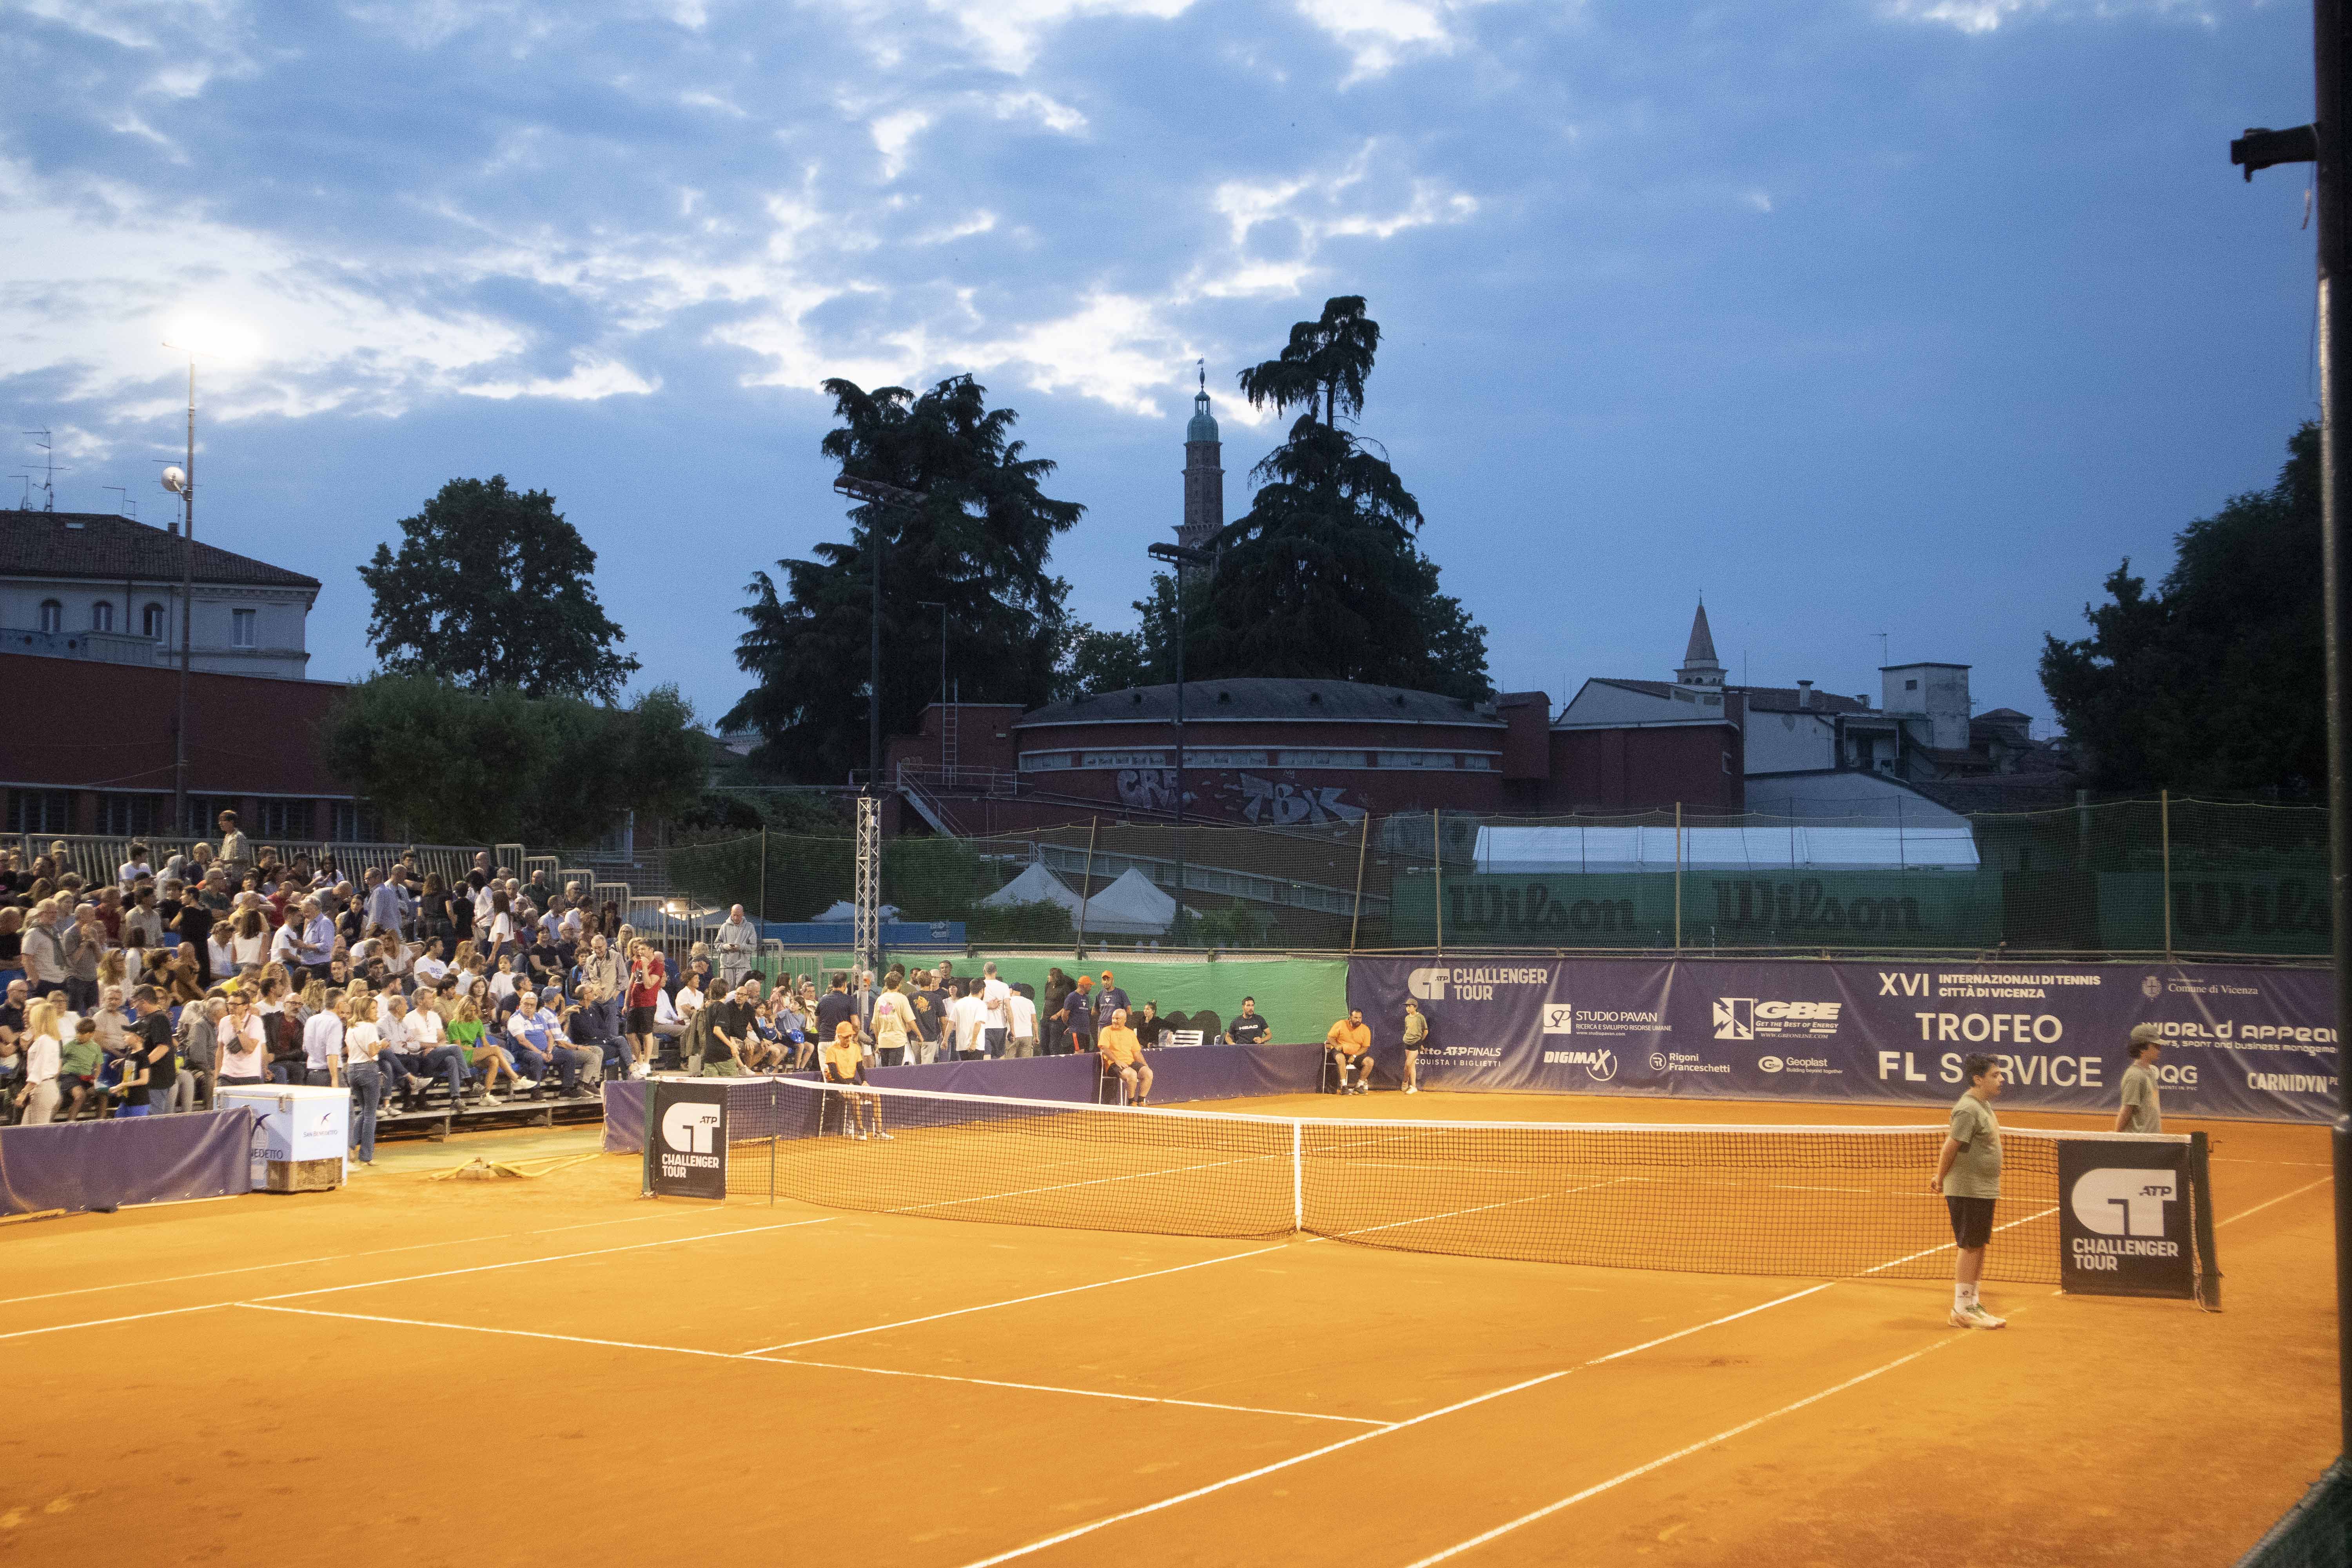 Torneo di tennis internazionale nella città di Vicenza